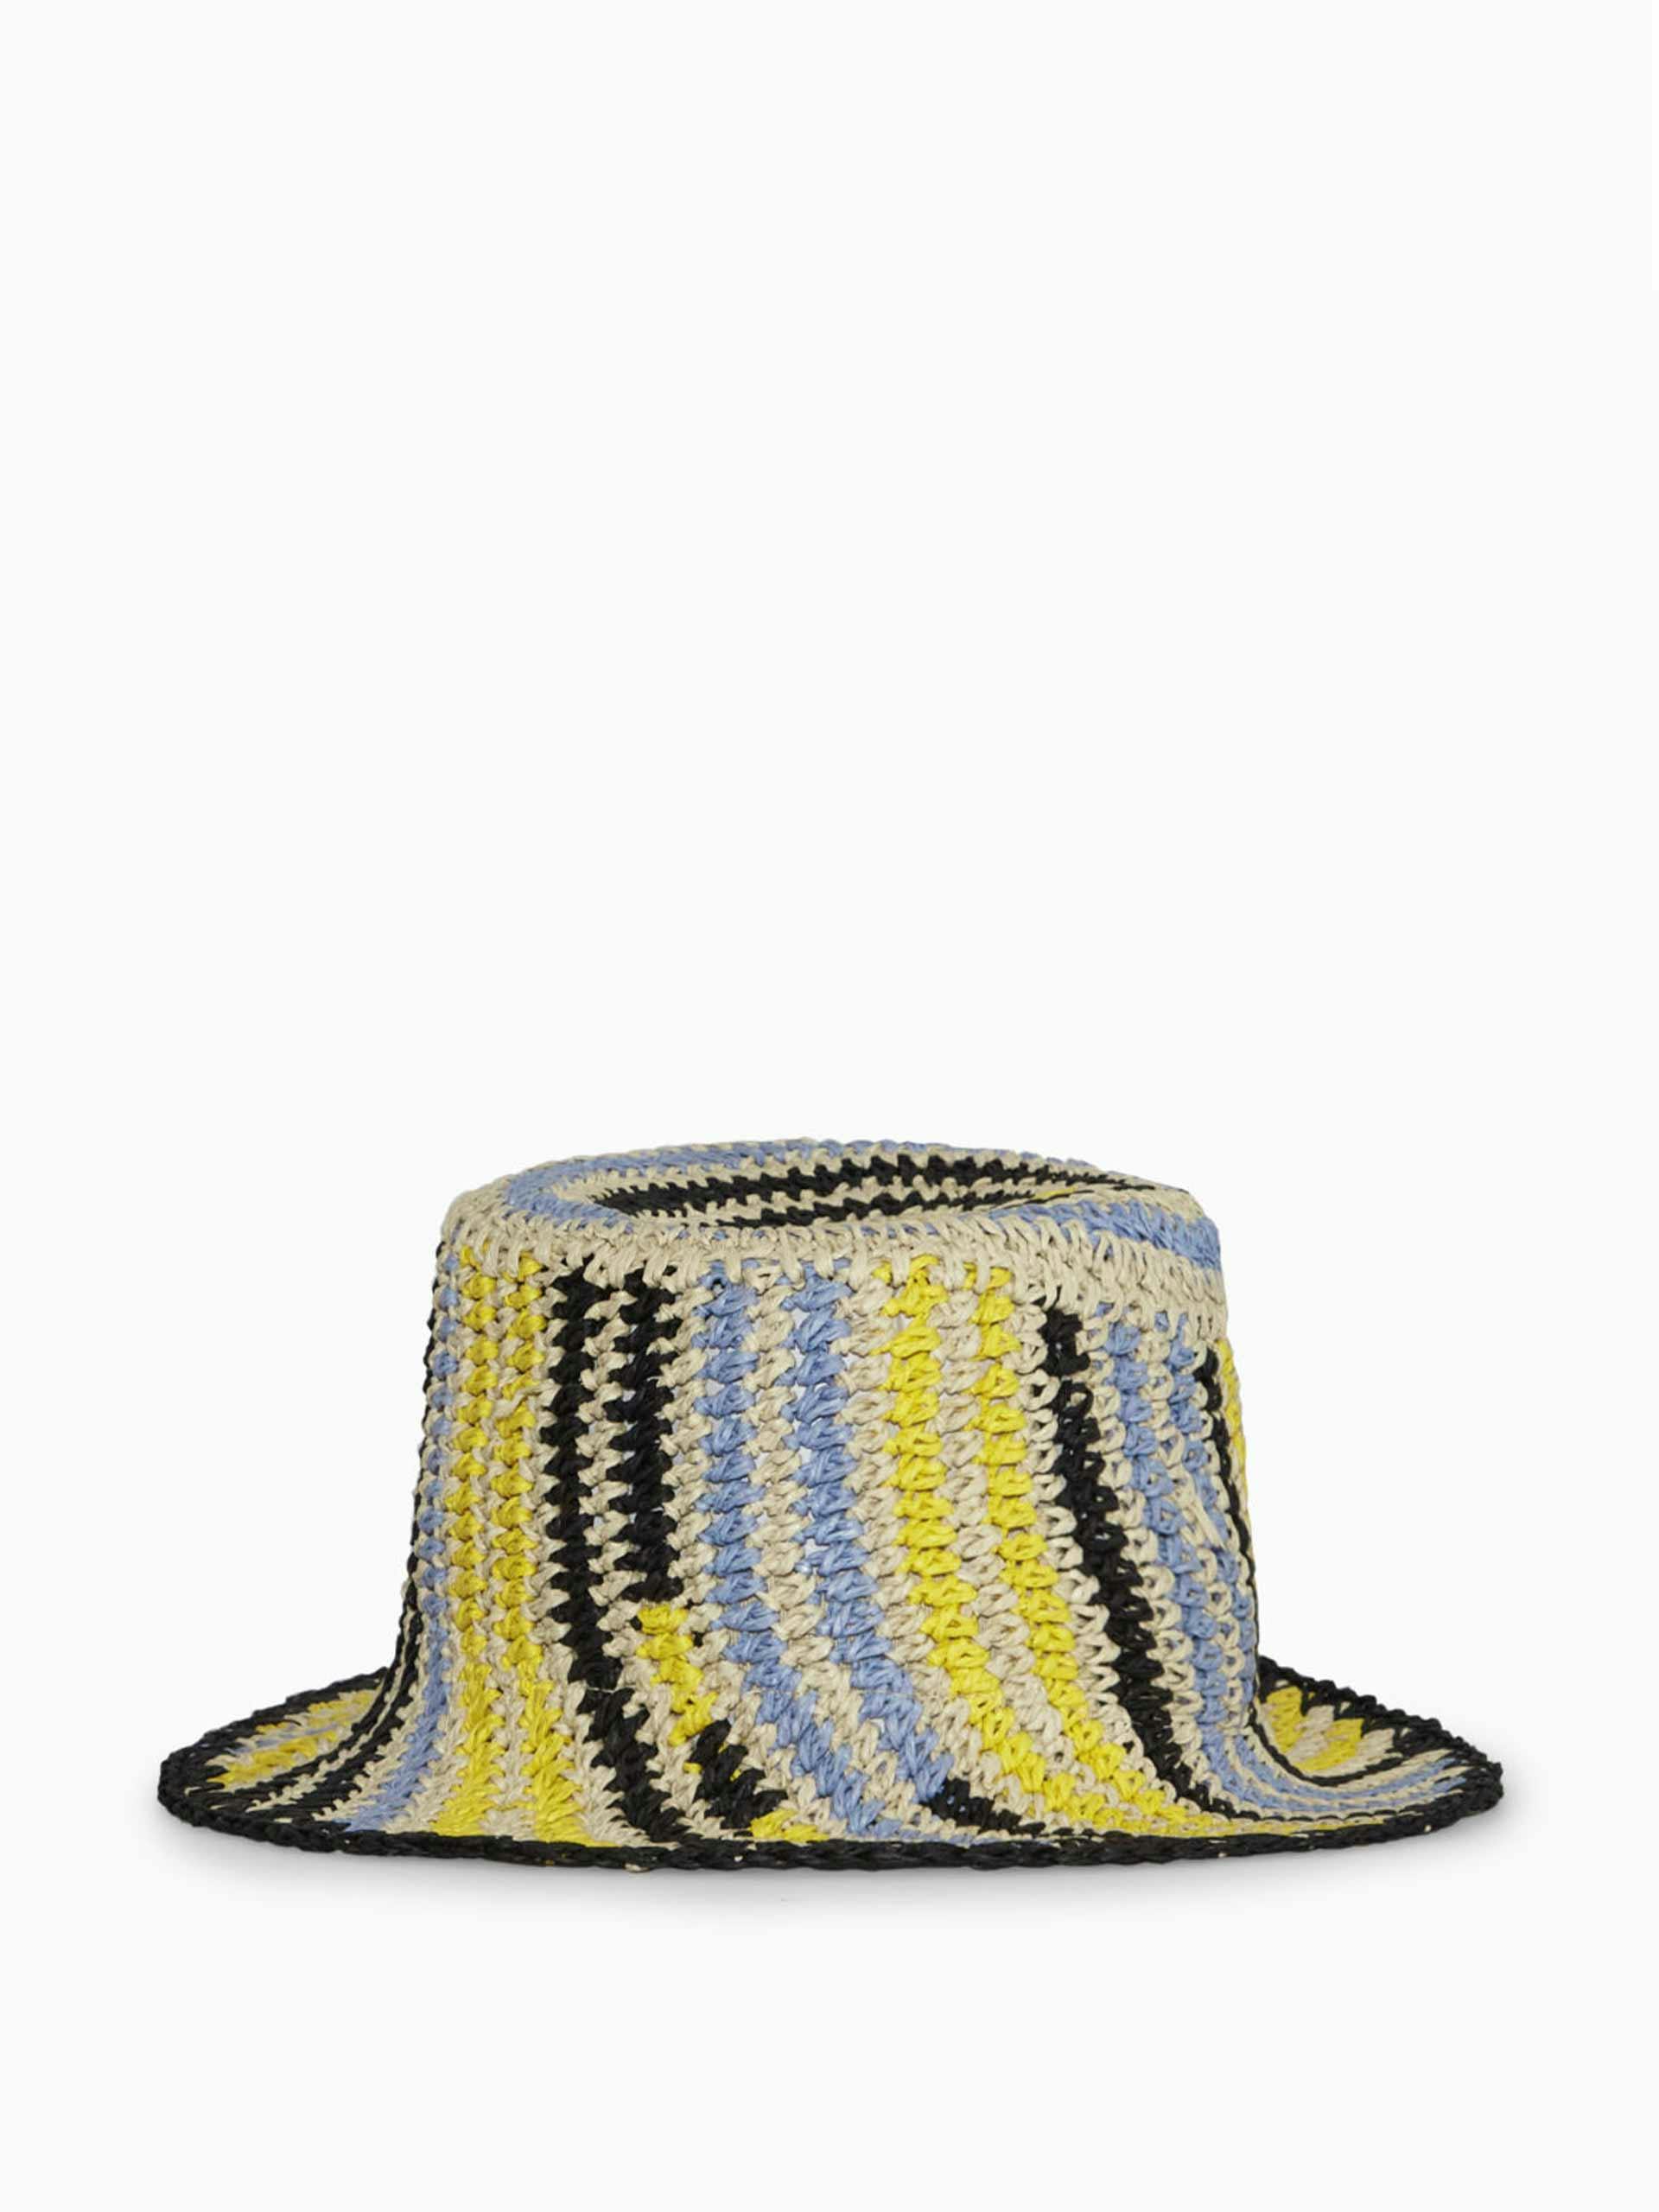 Striped woven straw bucket hat